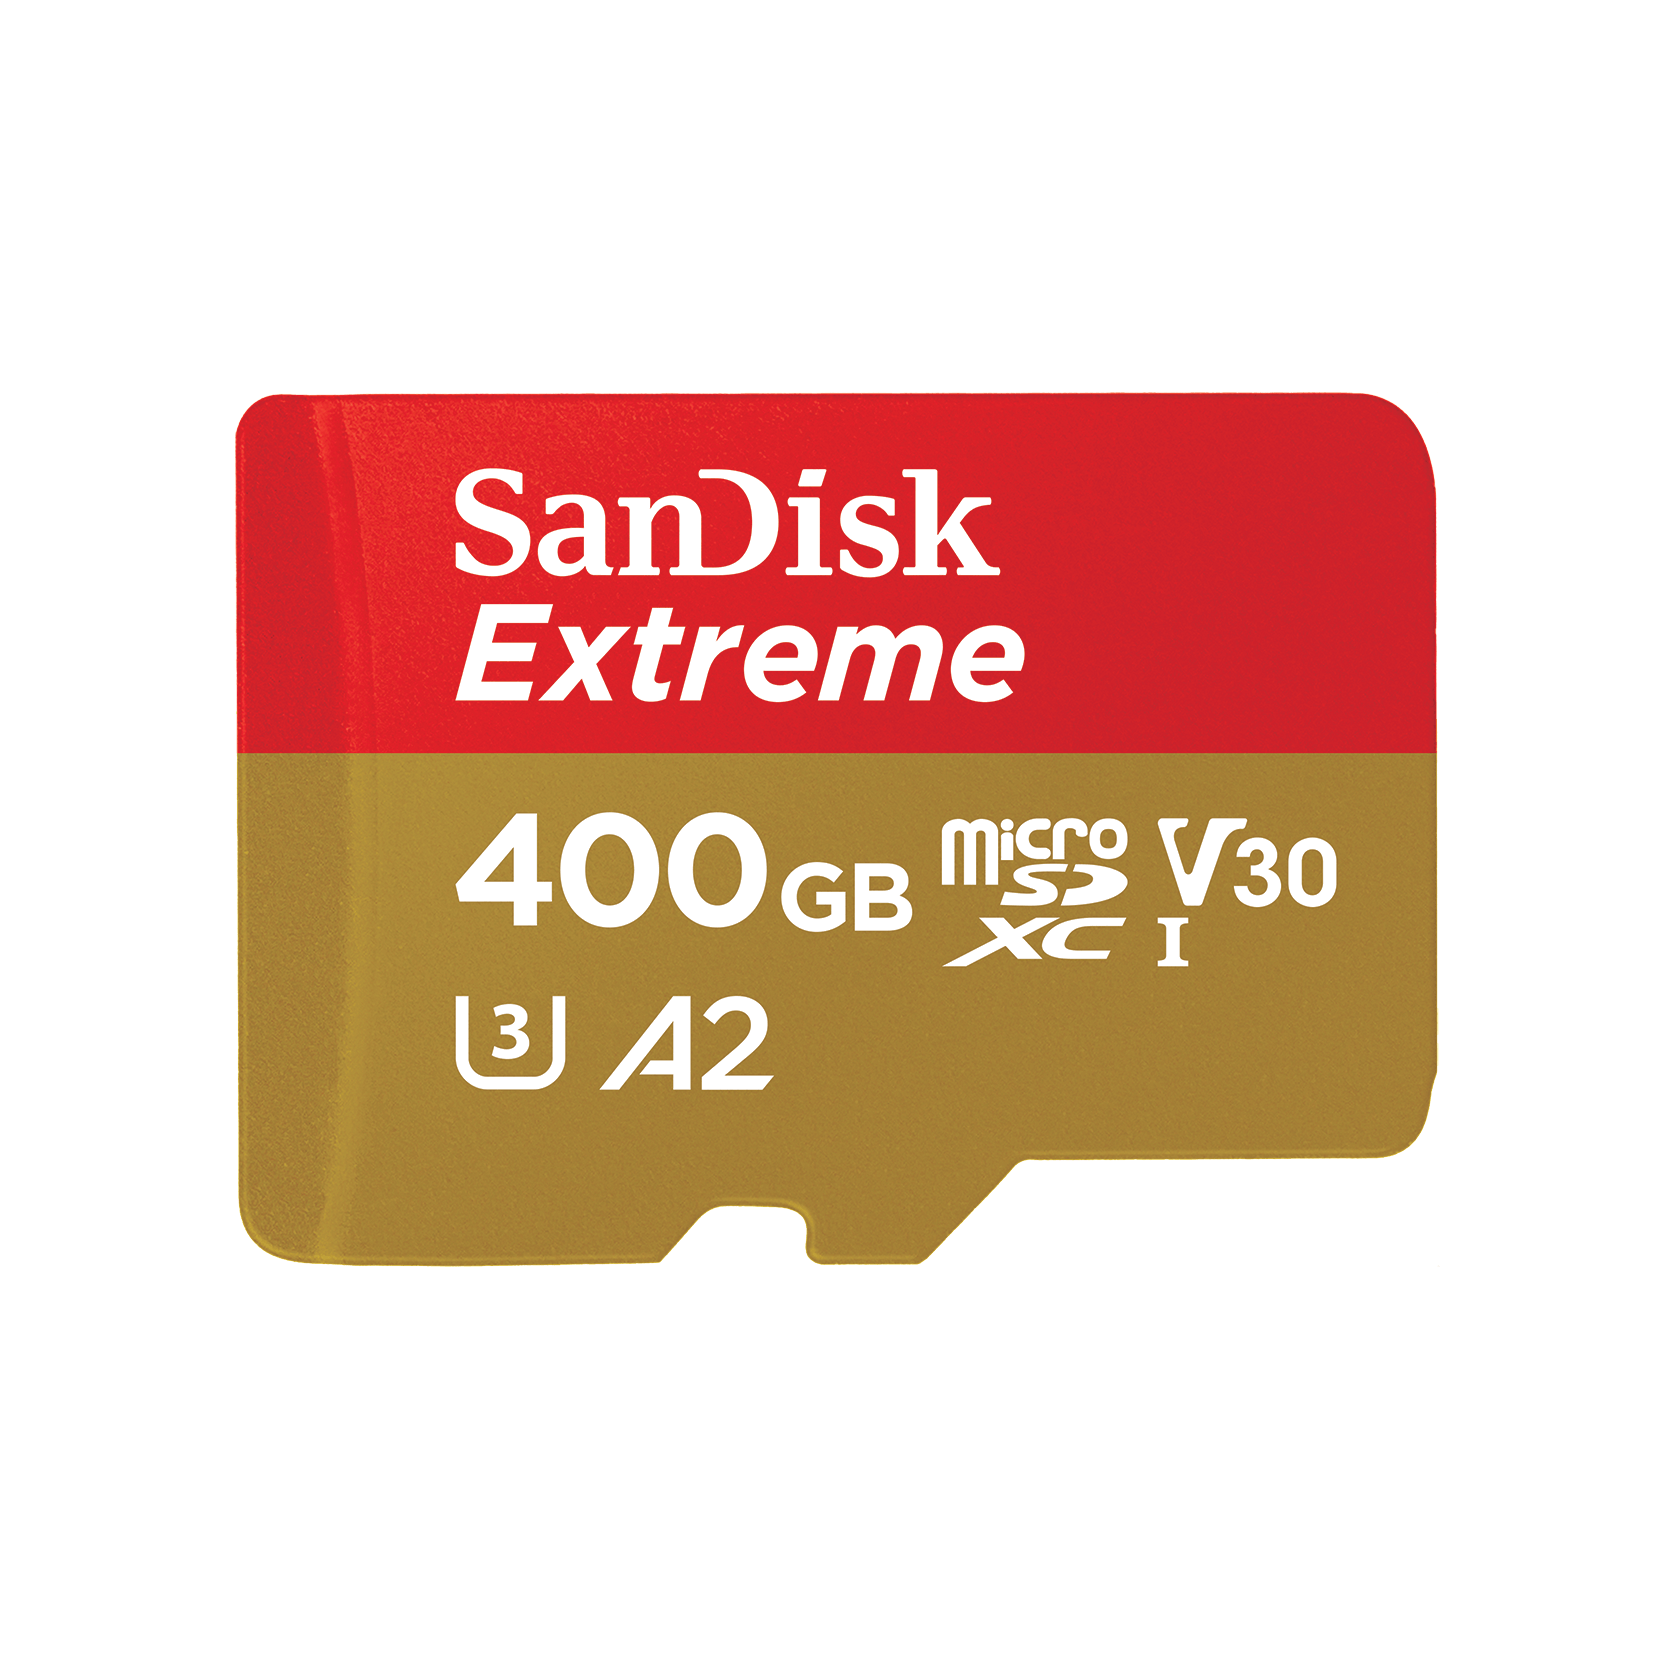 SanDisk Extreme MicroSD UHS-I Card - 400GB - SDSQXA1-400G-AN6MA